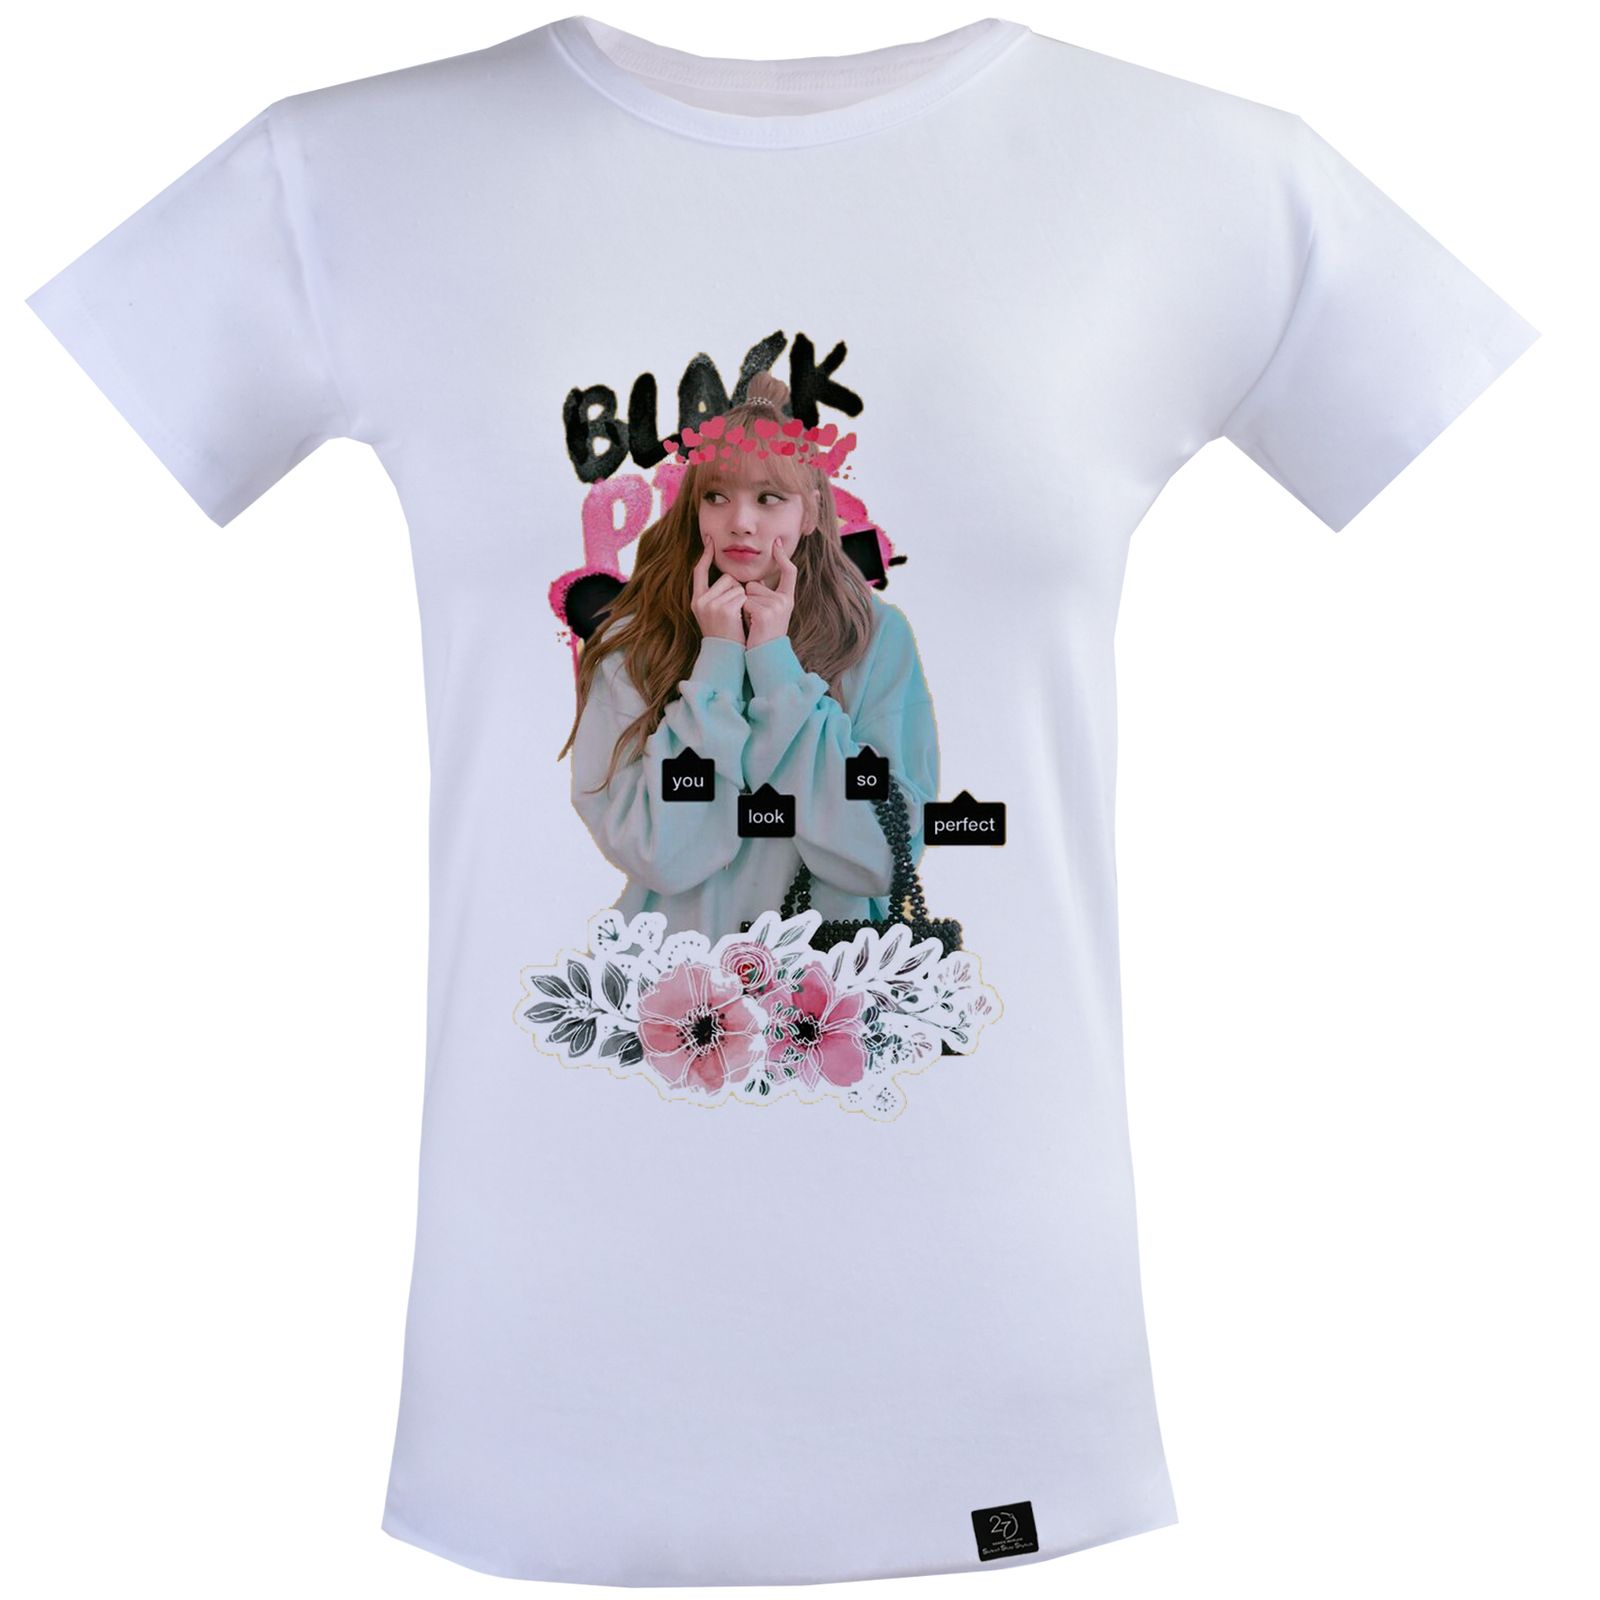 تی شرت آستین کوتاه زنانه 27 مدل لیسا بلک پینک کد WN510 -  - 1